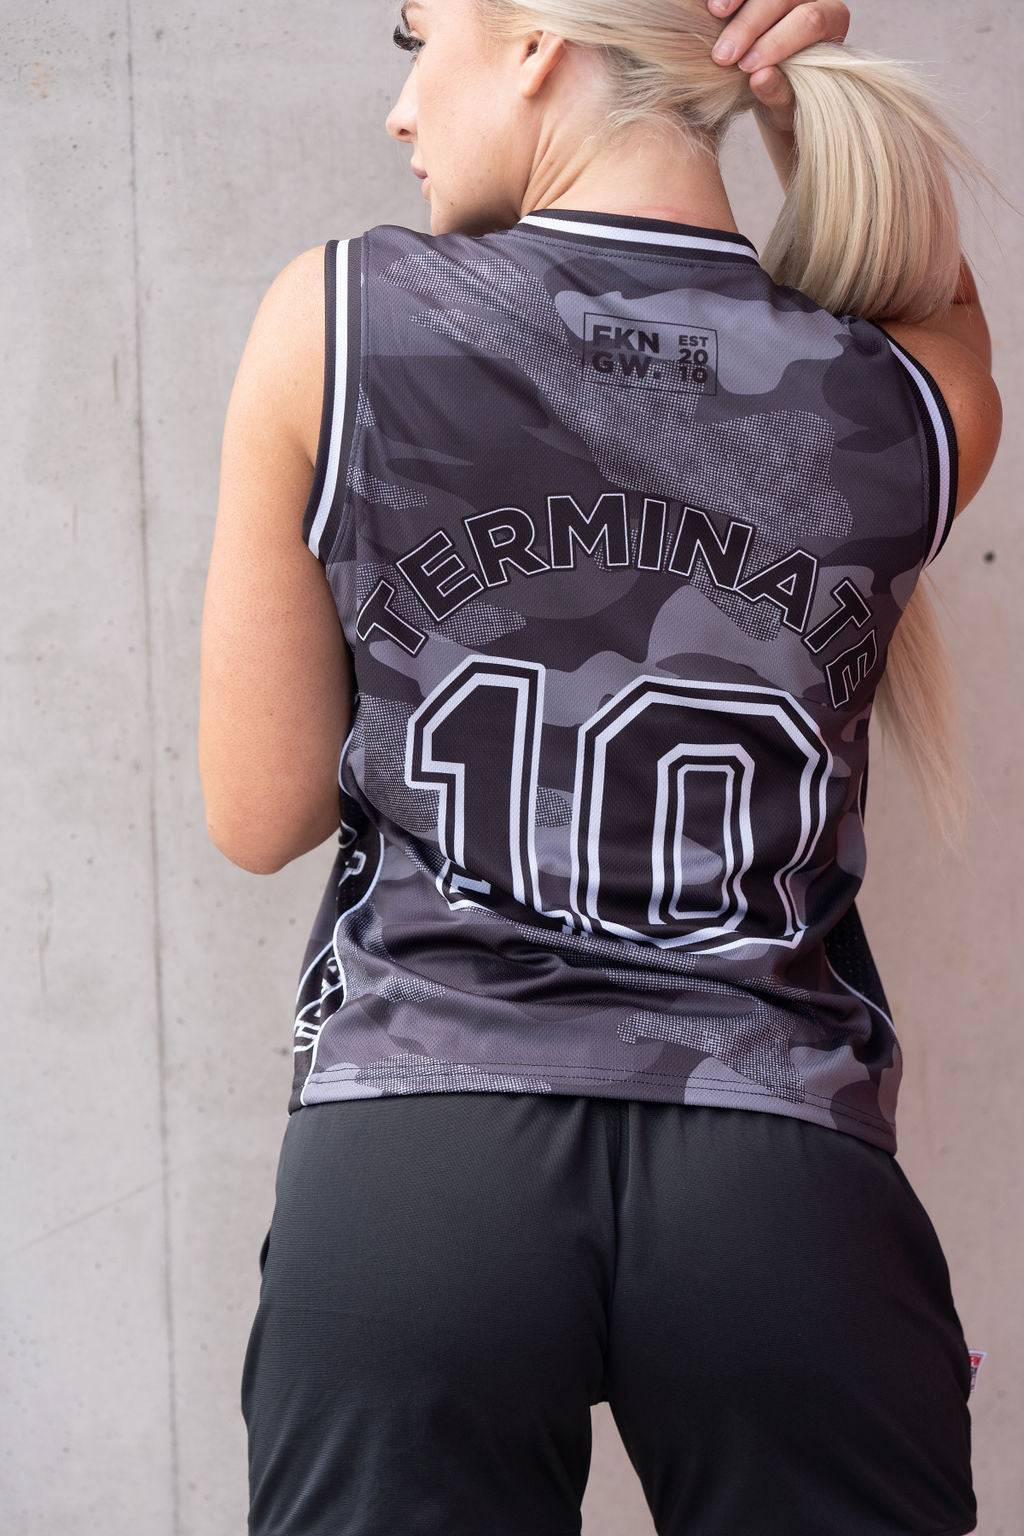 Terminate | Women's Gym Training Basketball Jersey | Camo